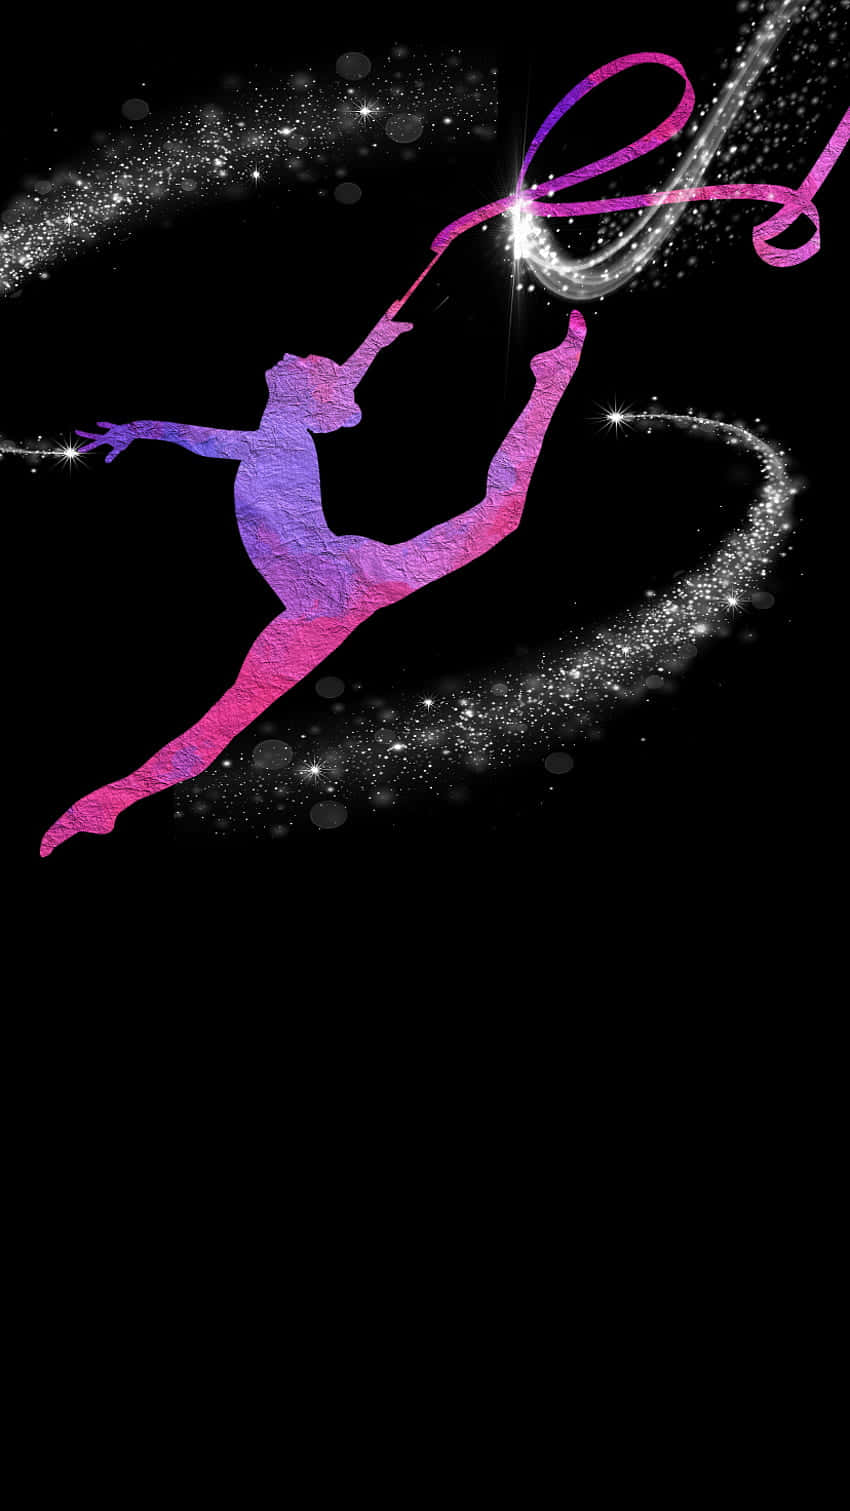 Free Cute Gymnastics Wallpaper Downloads, Cute Gymnastics Wallpaper for FREE